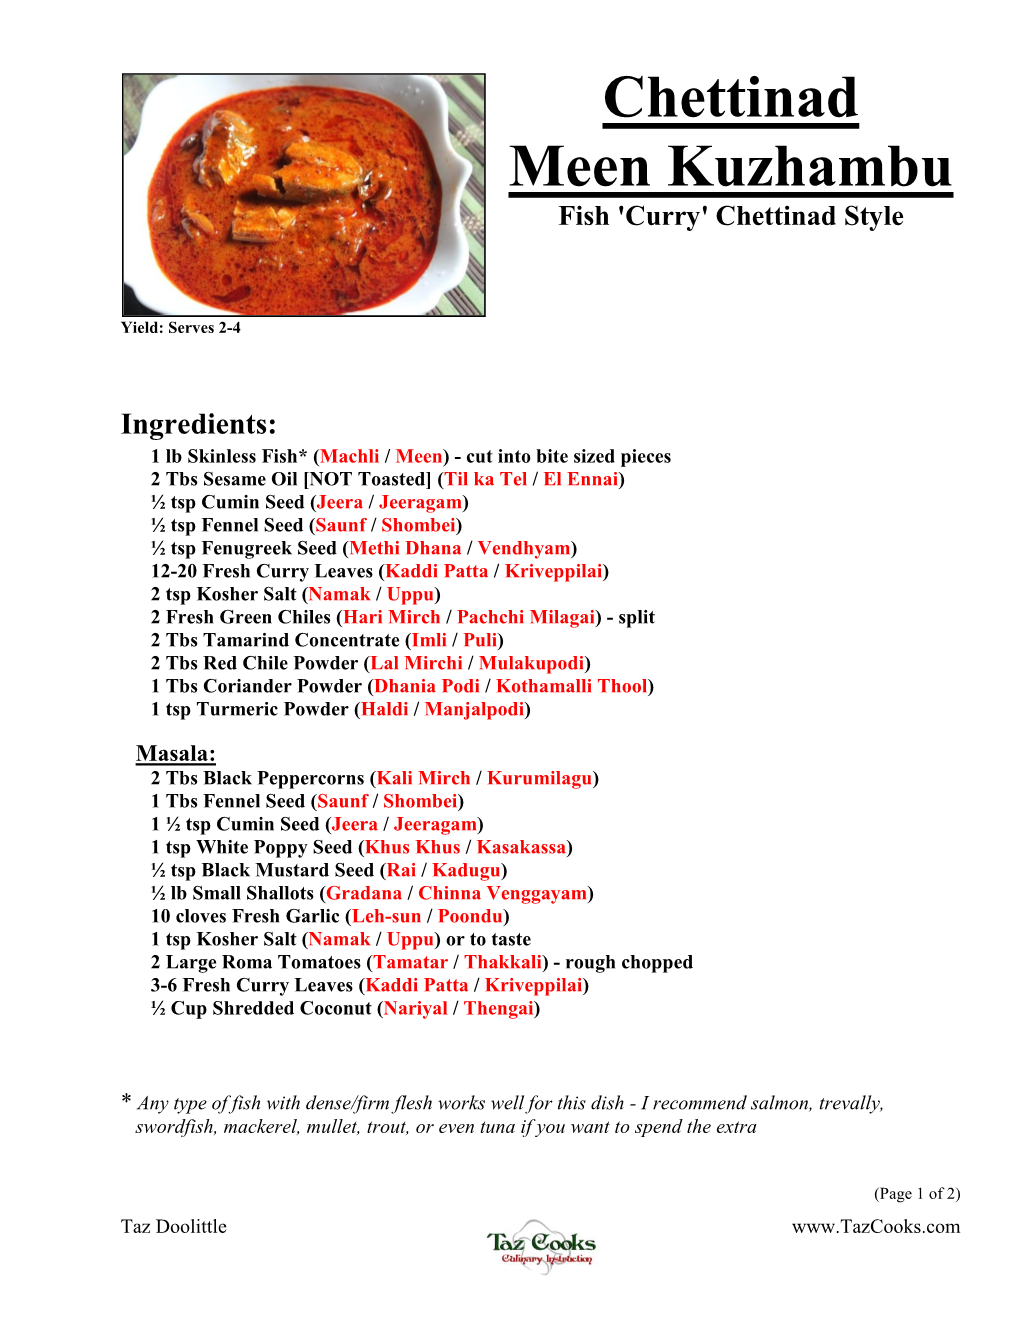 Chettinad Meen Kuzhambu Fish 'Curry' Chettinad Style